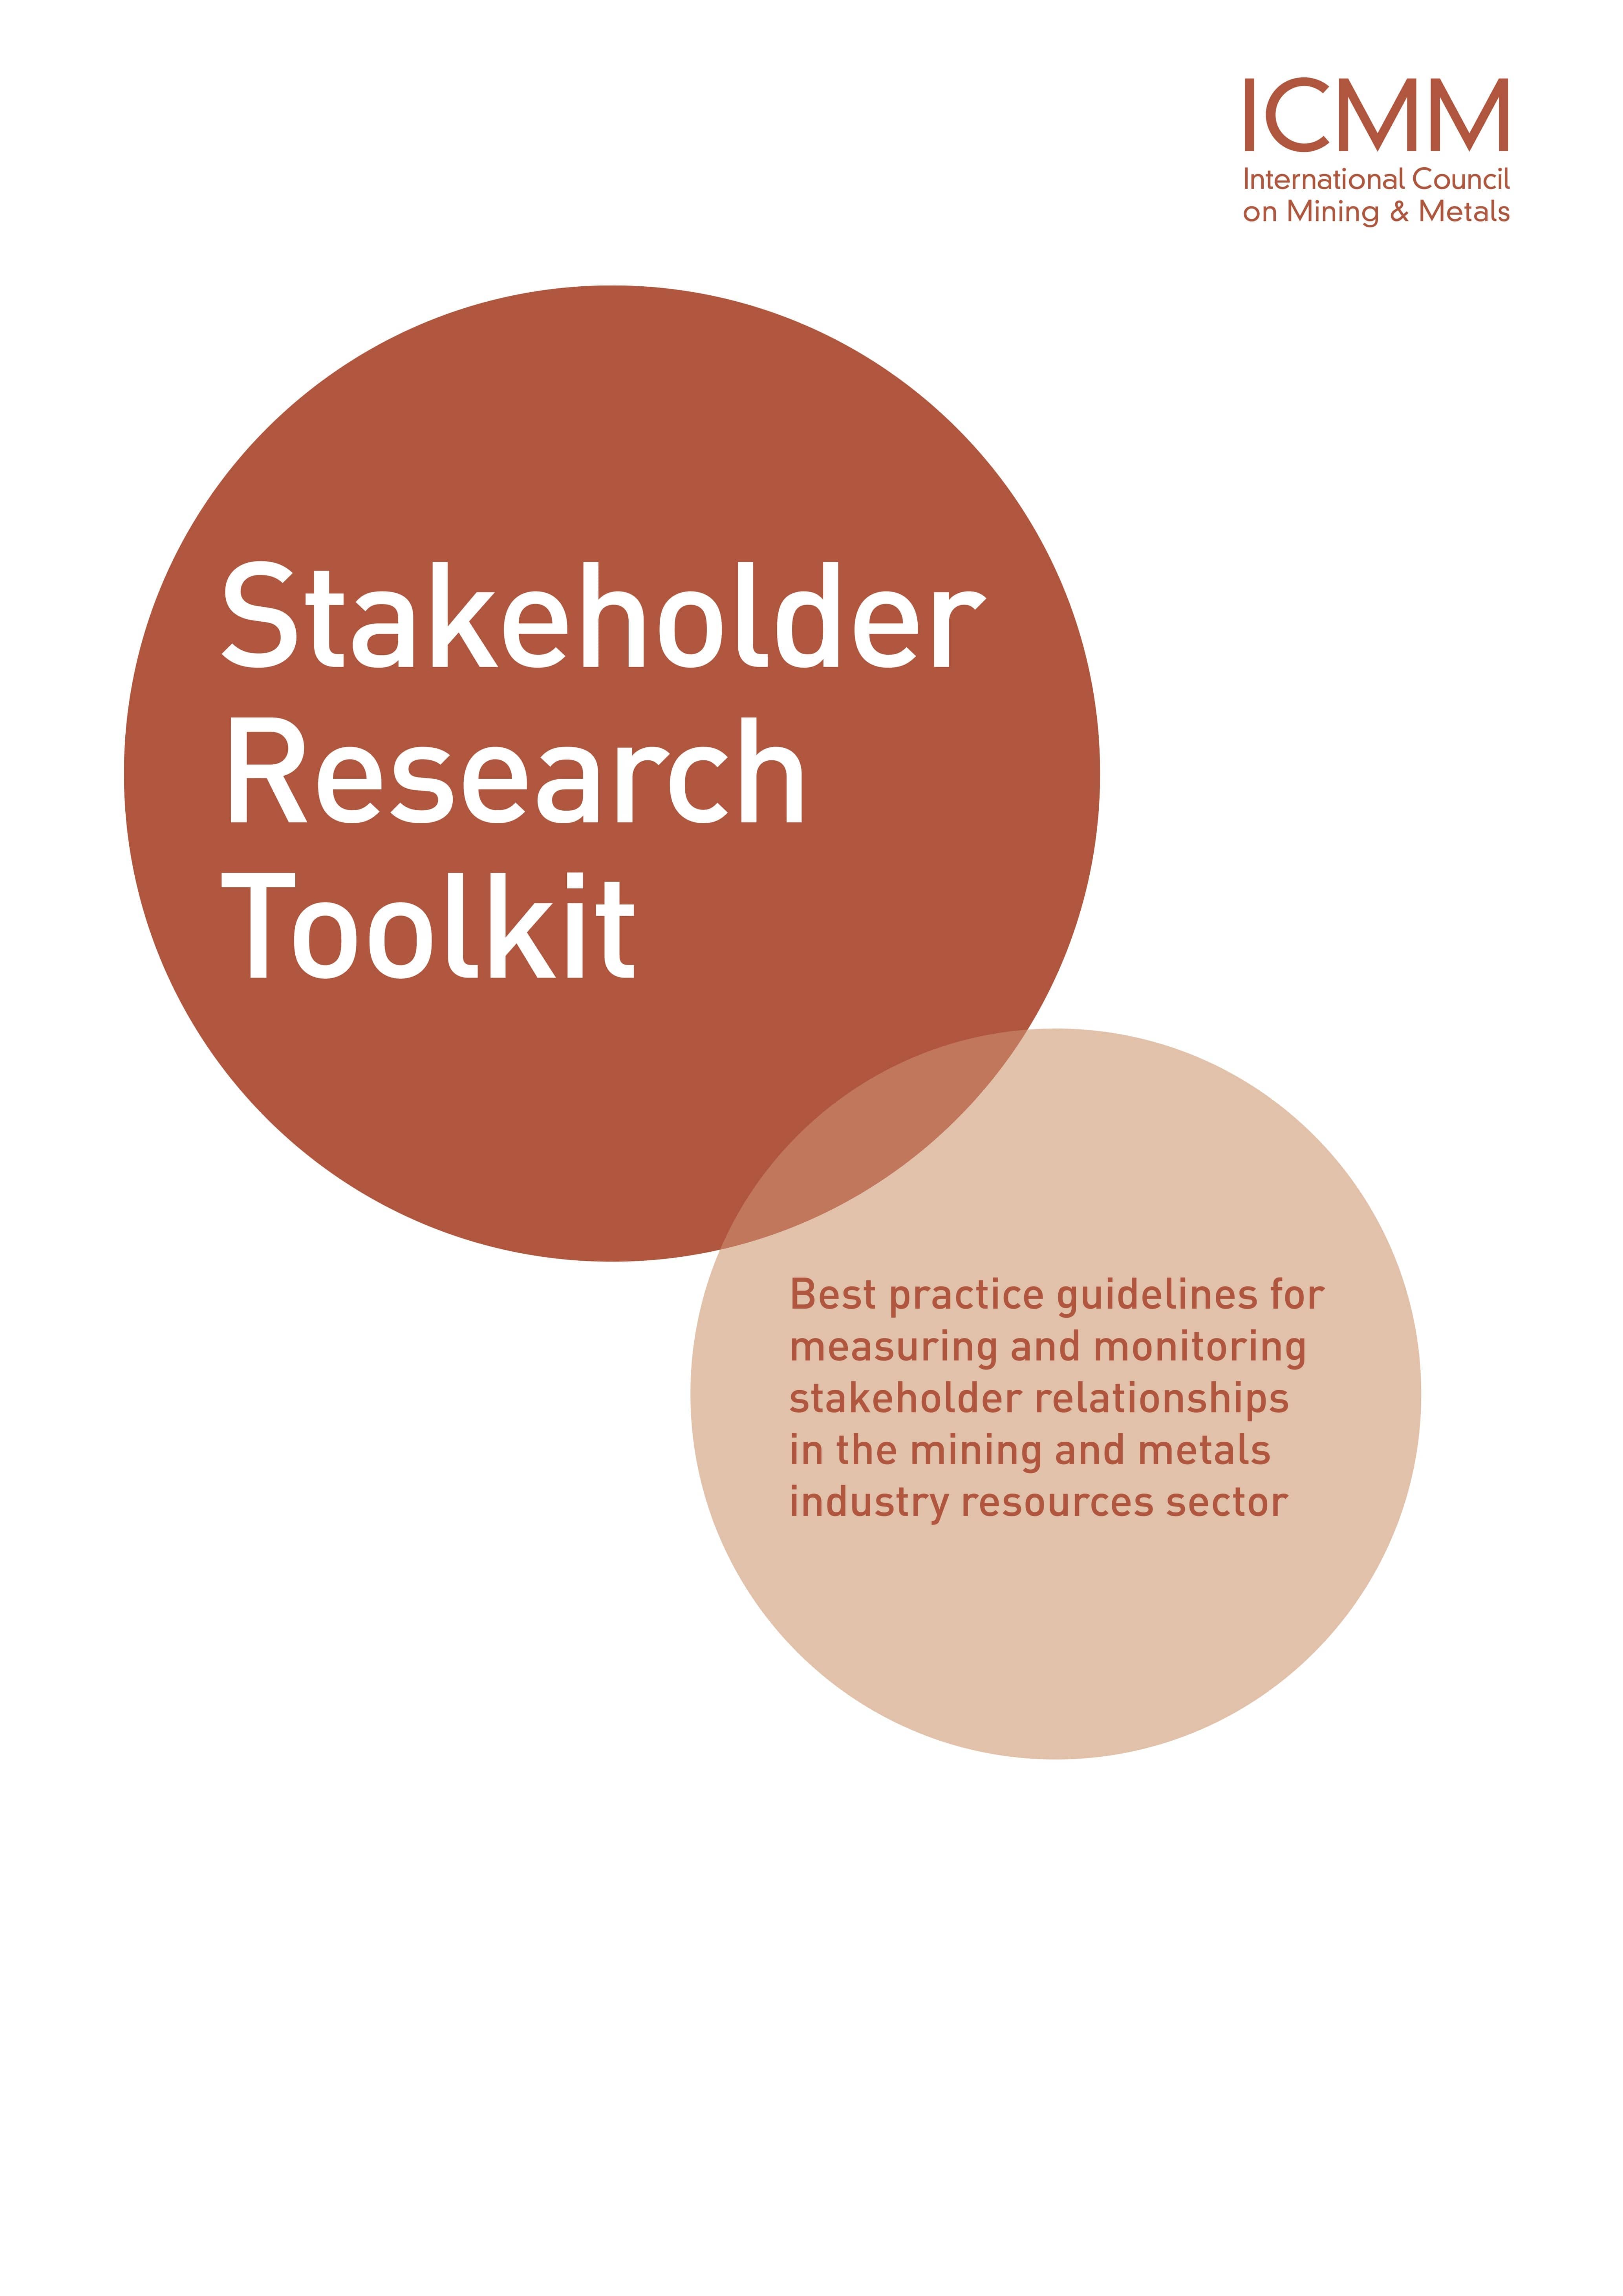 Stakeholder Research Toolkit (ICMM, 2015)